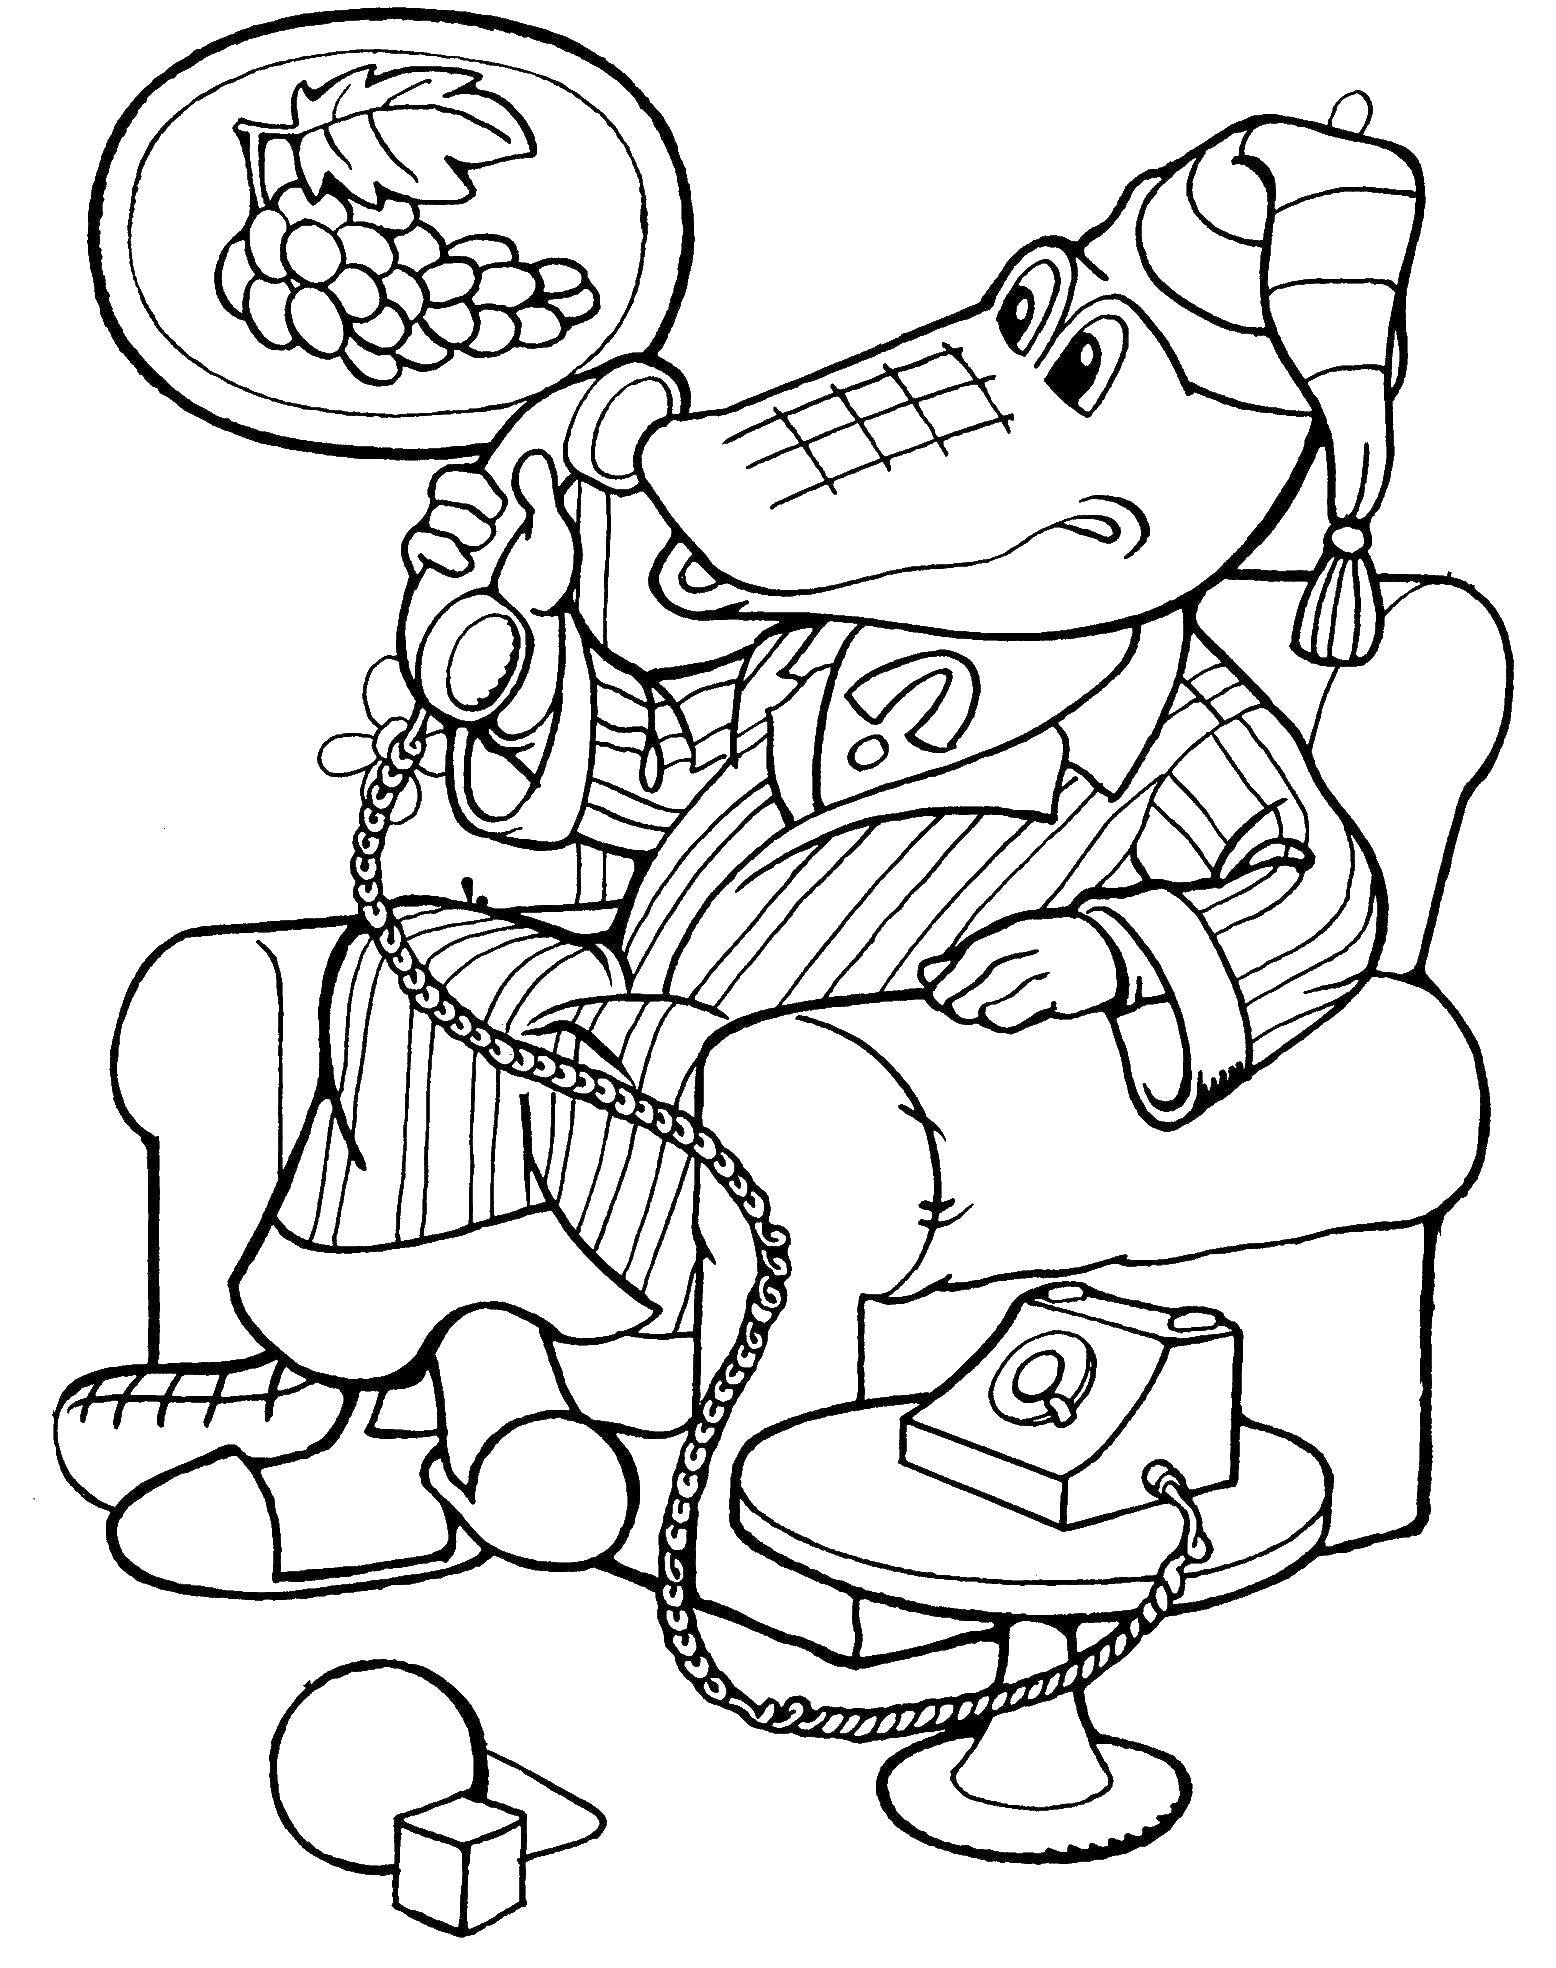 Coloring Shrek talking on the phone. Category cartoons. Tags:  crocodile, Cheburashka.